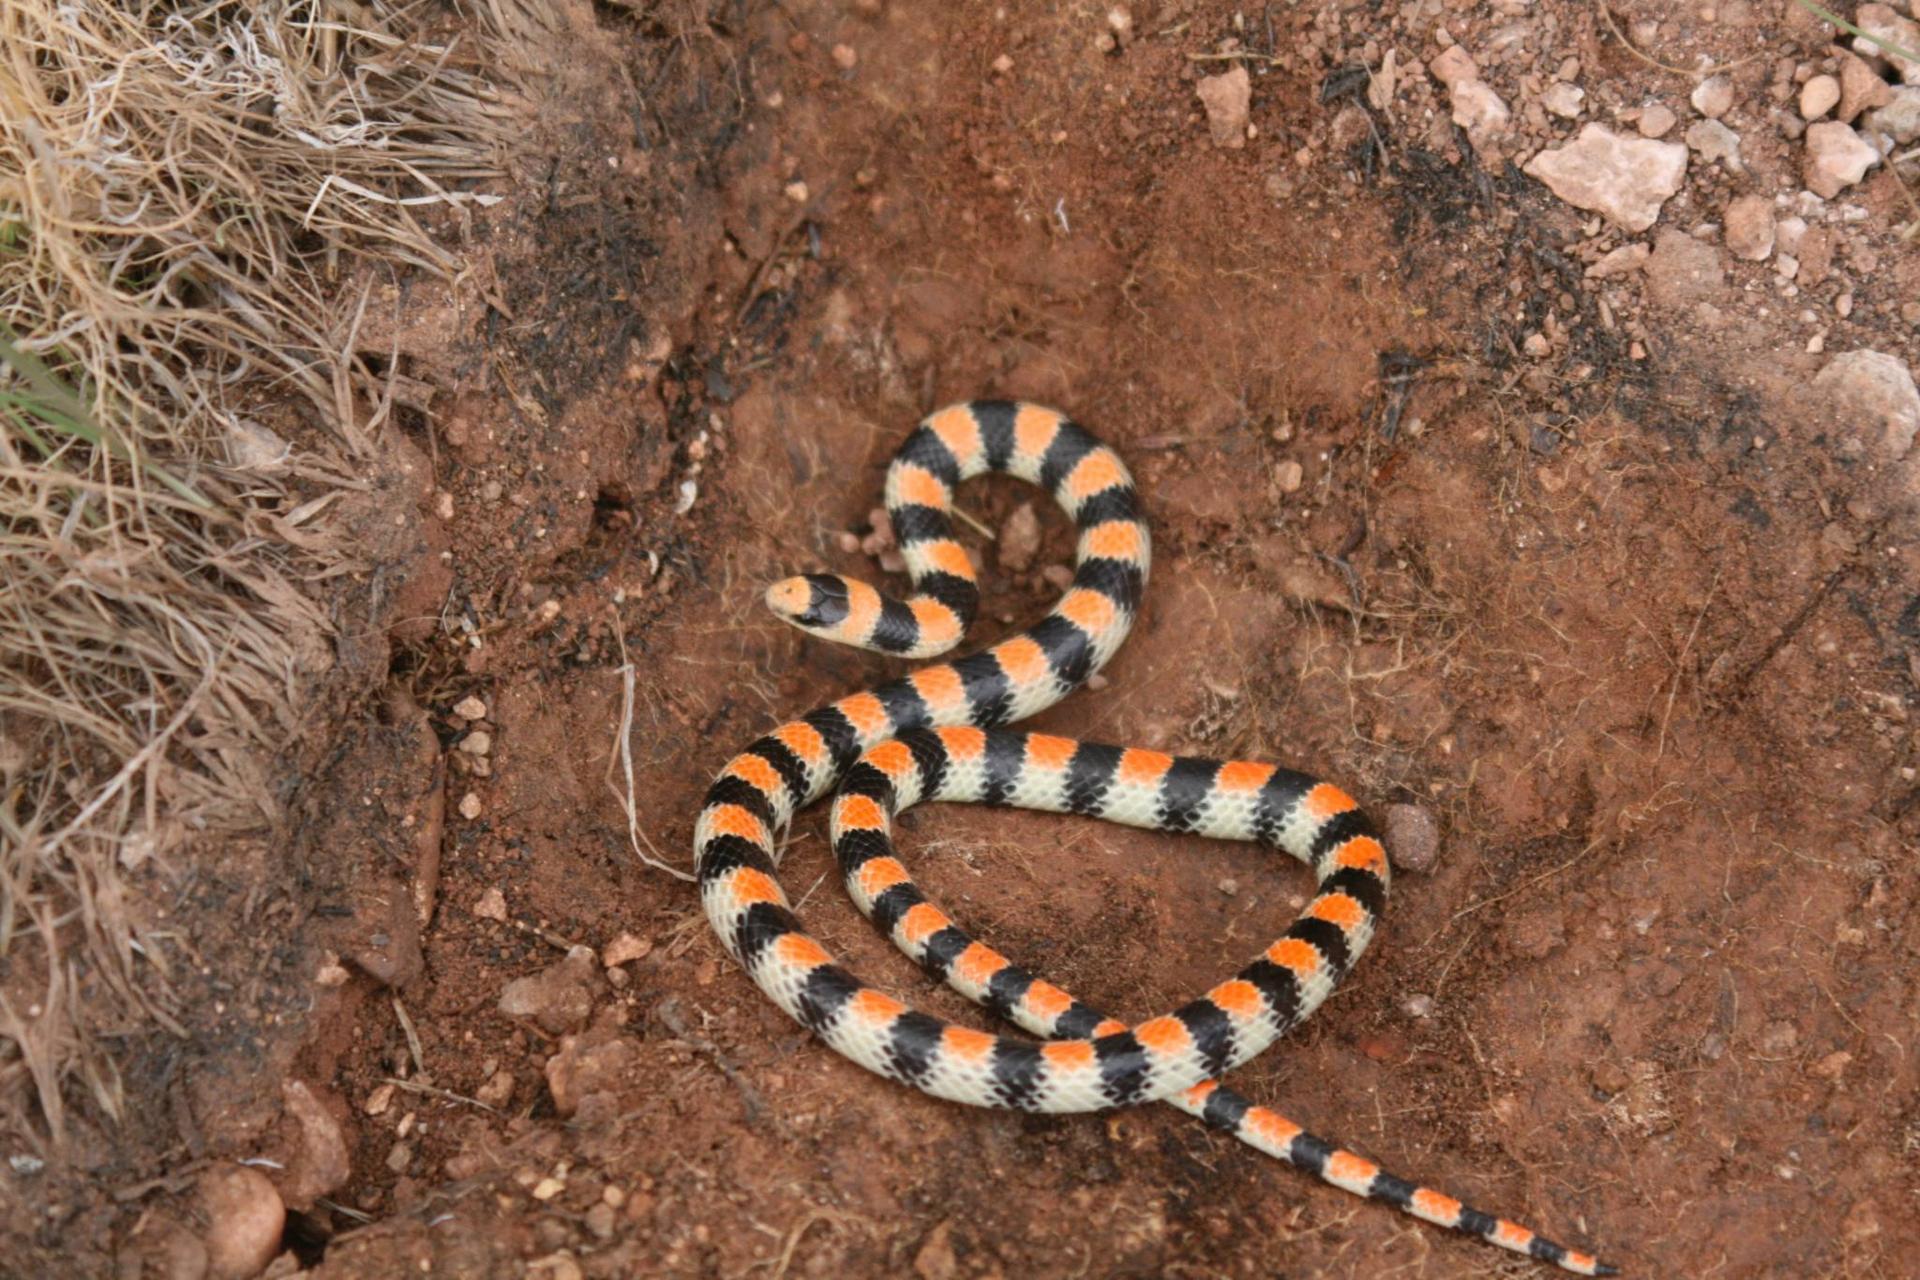 ground-snake-photo-credit-Nicki-Frey1.jpg